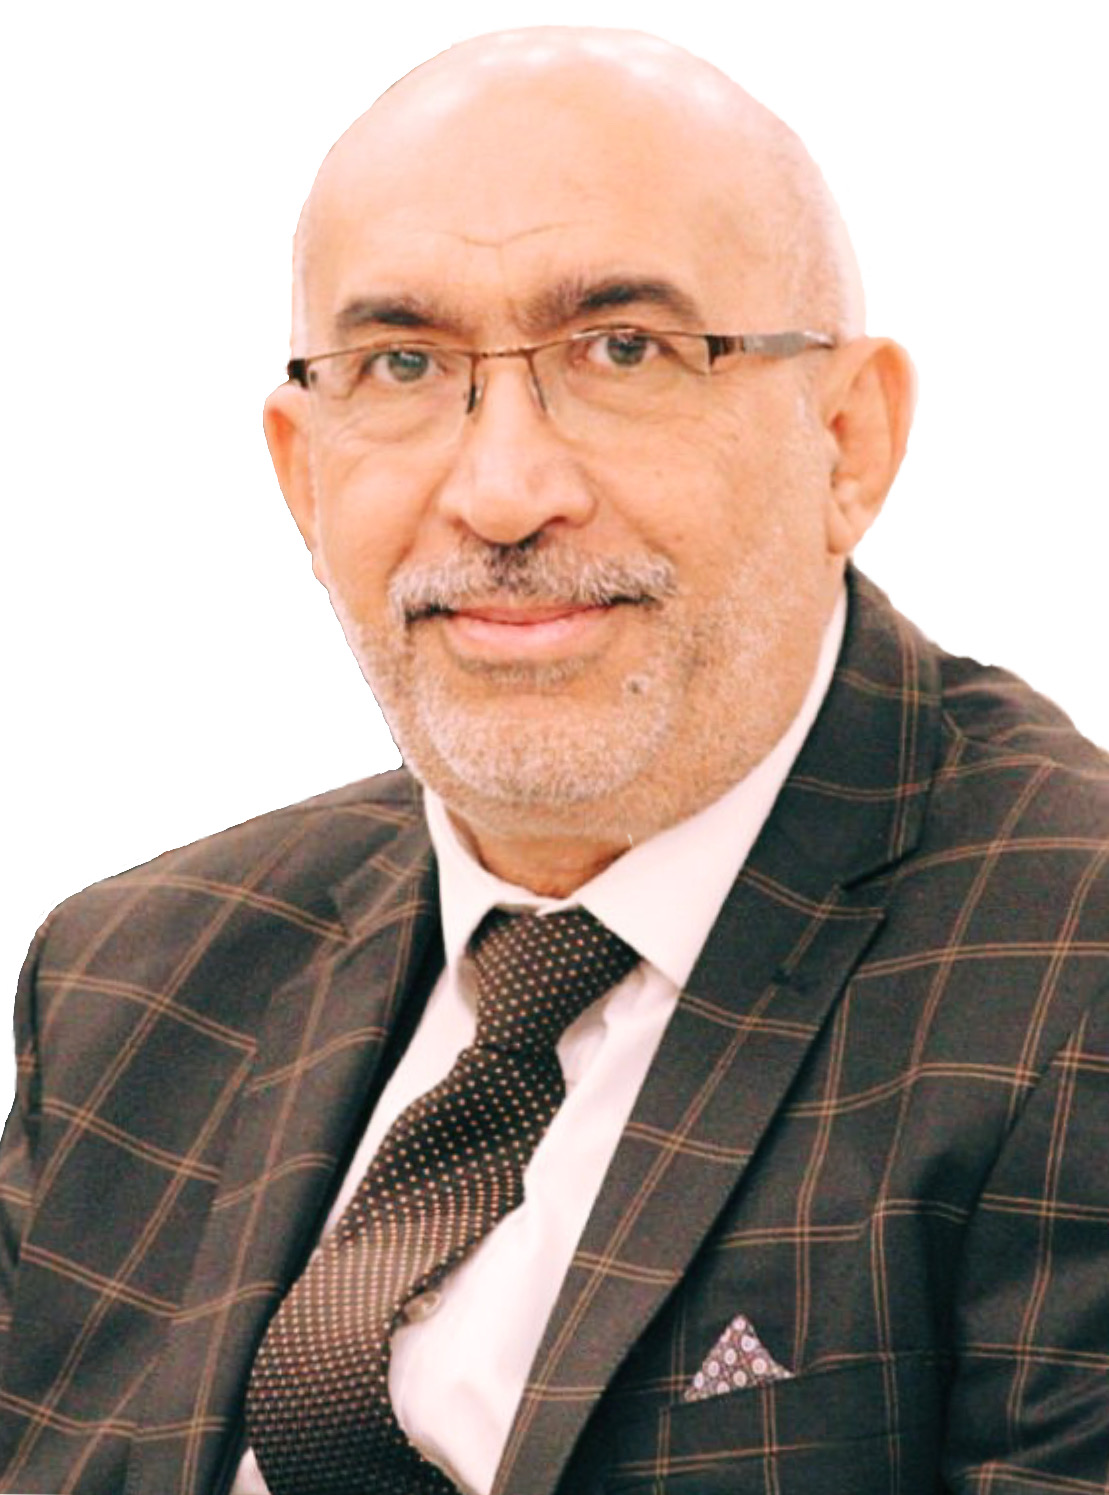 Mohammed al bahadlili